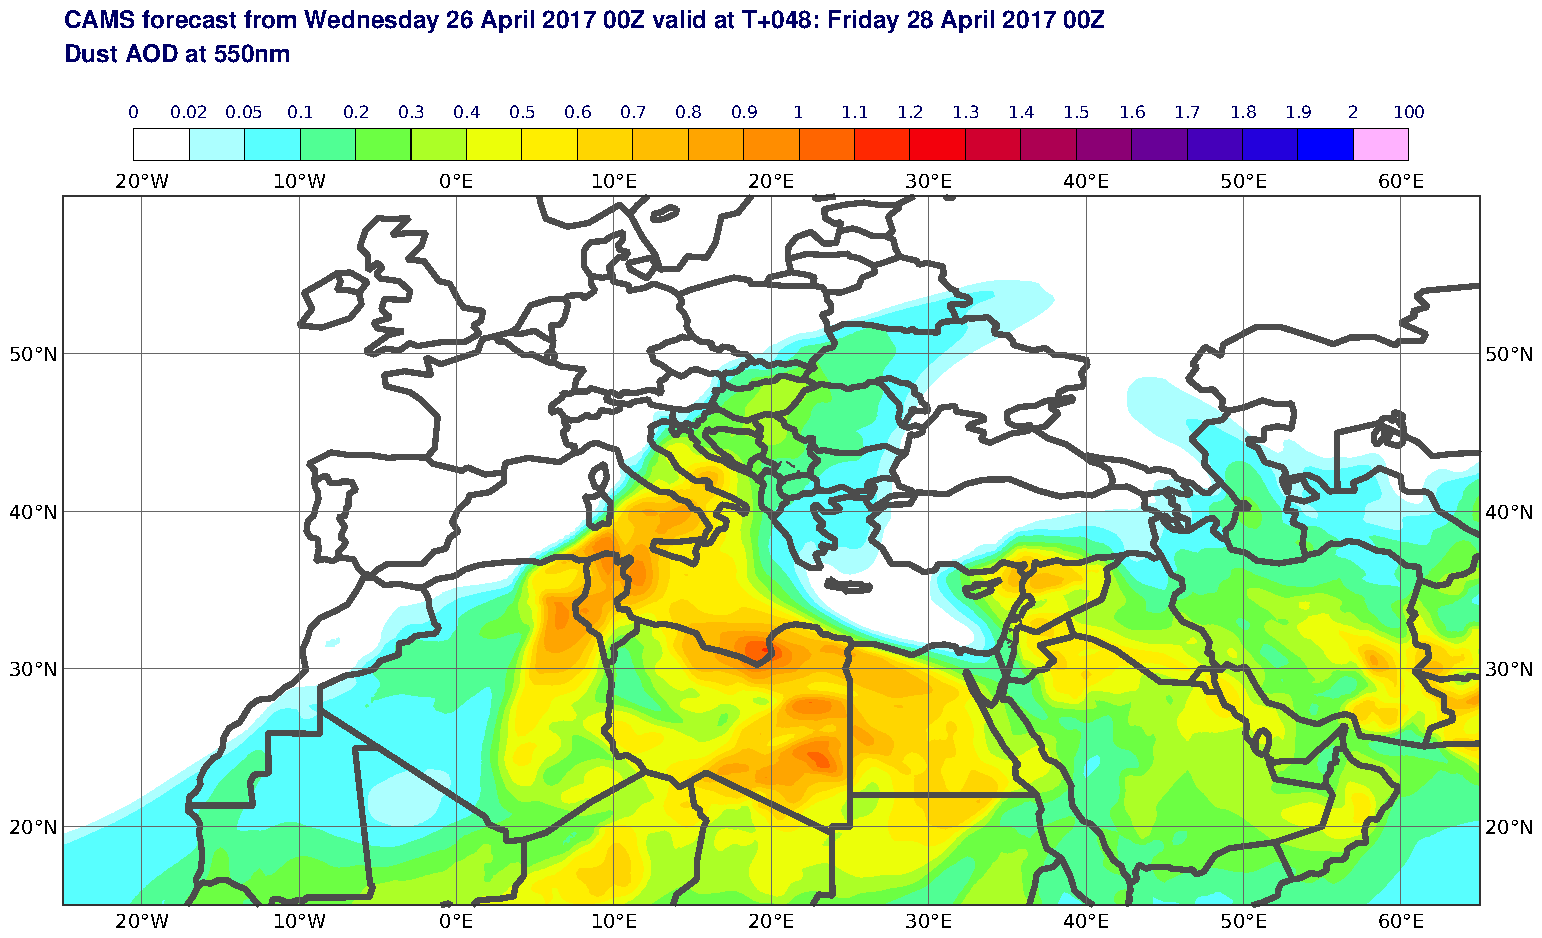 Dust AOD at 550nm valid at T48 - 2017-04-28 00:00